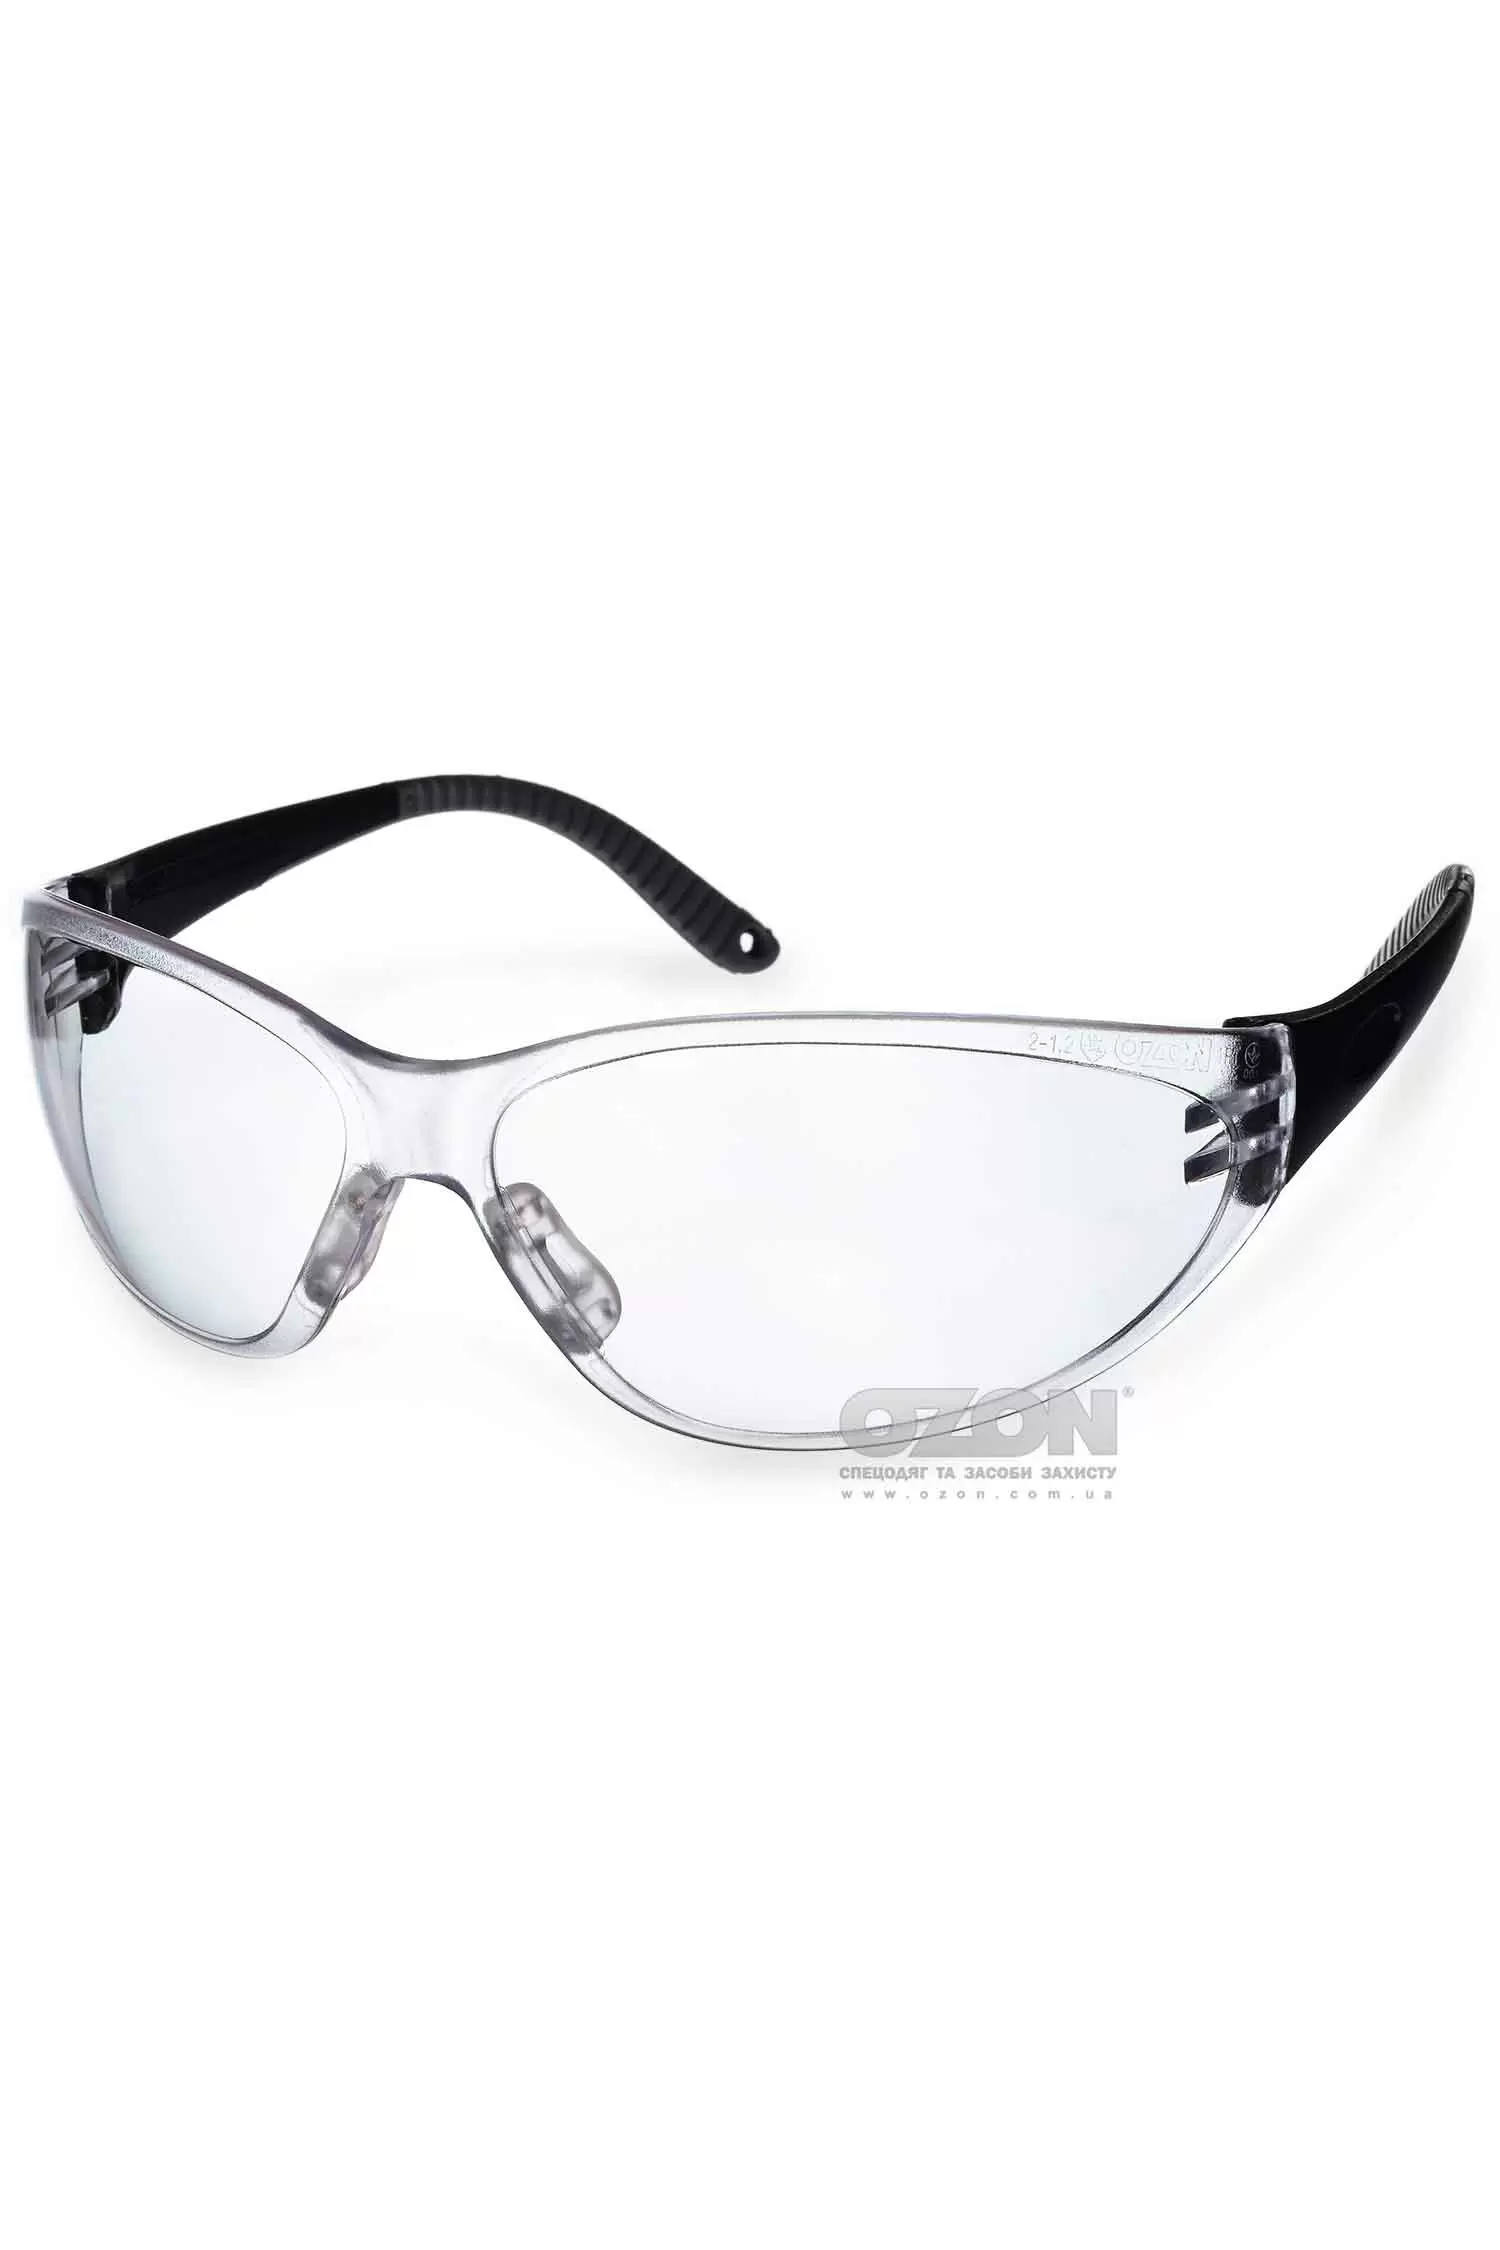 Защитные очки OZON™ 7-033 KN - Фото 1